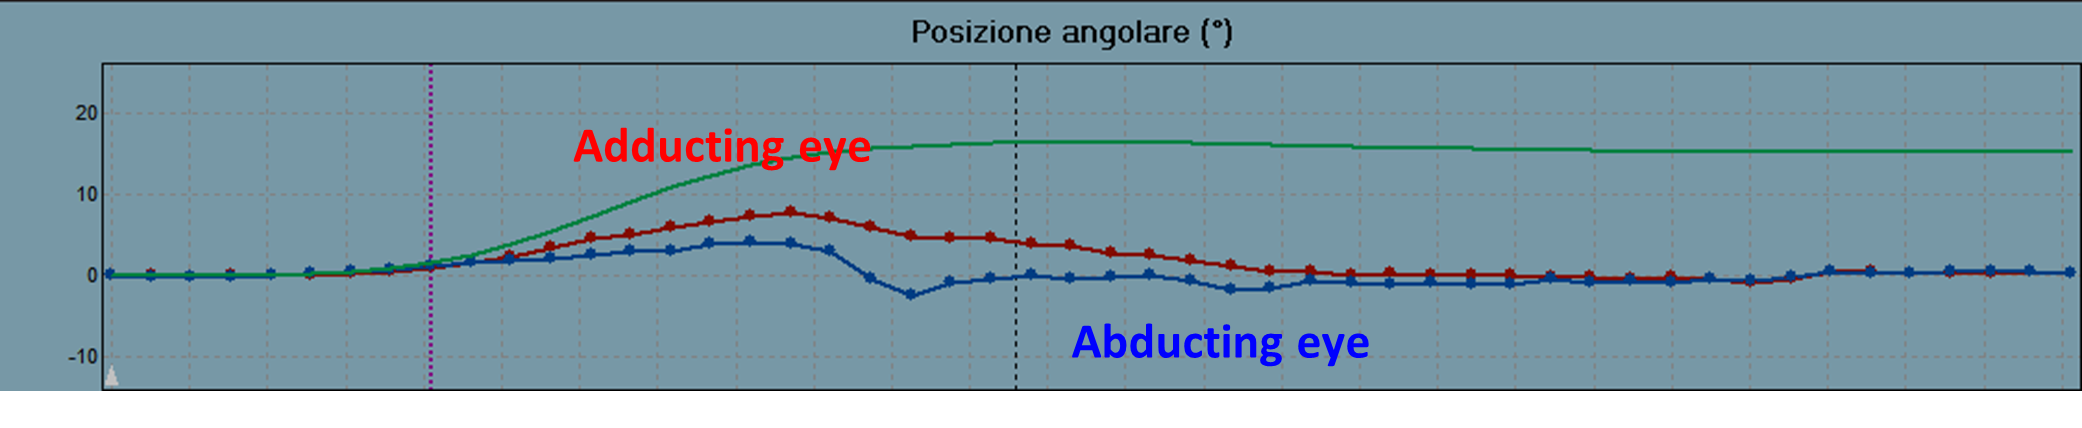 VHIT gaze position graph reduced gain